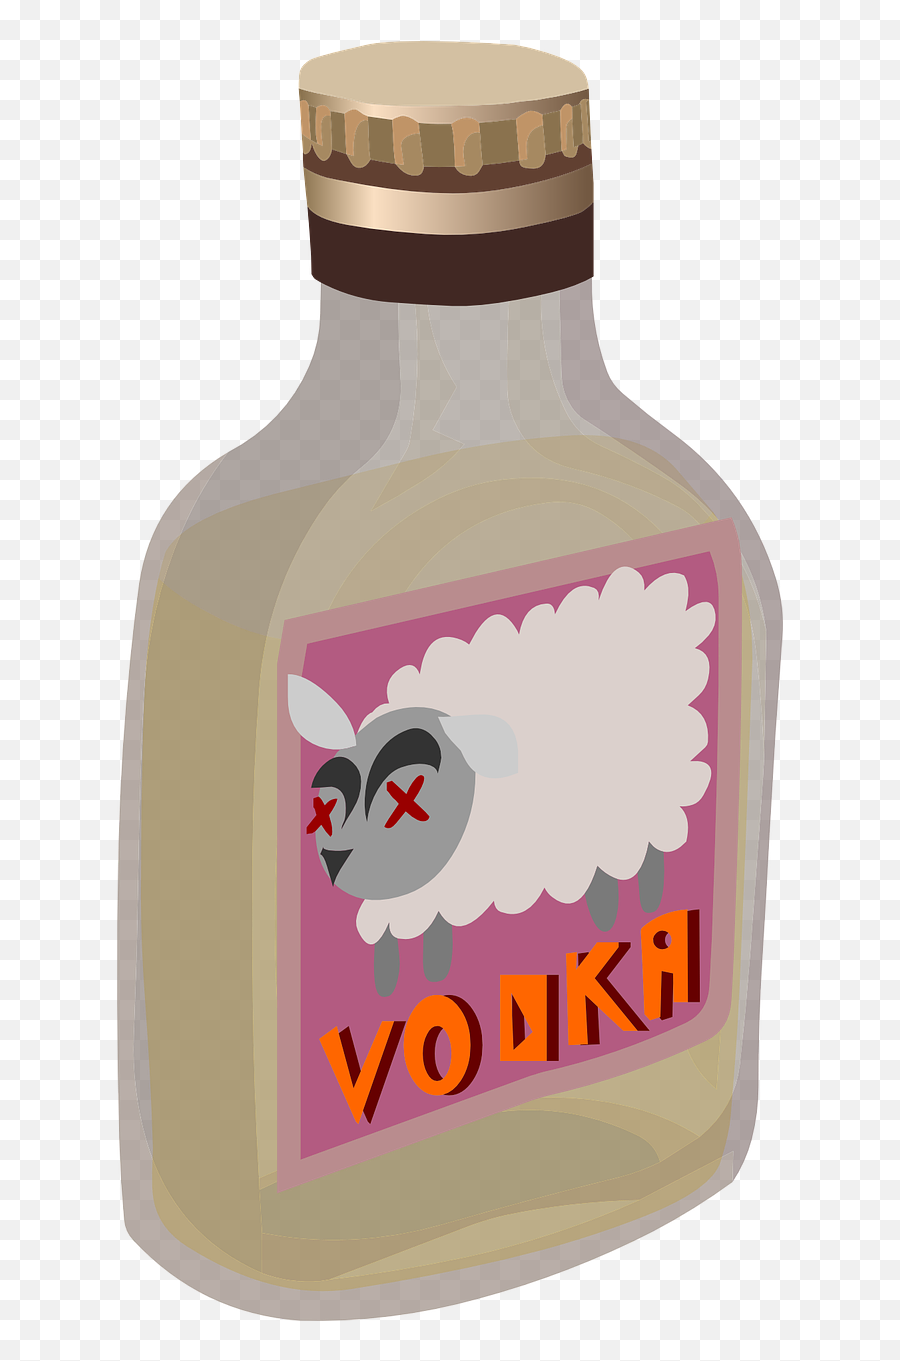 Vodka Bottle Alcohol Drink Liquor - Vodka Bottle Cartoon Emoji,Martini Party Emoji